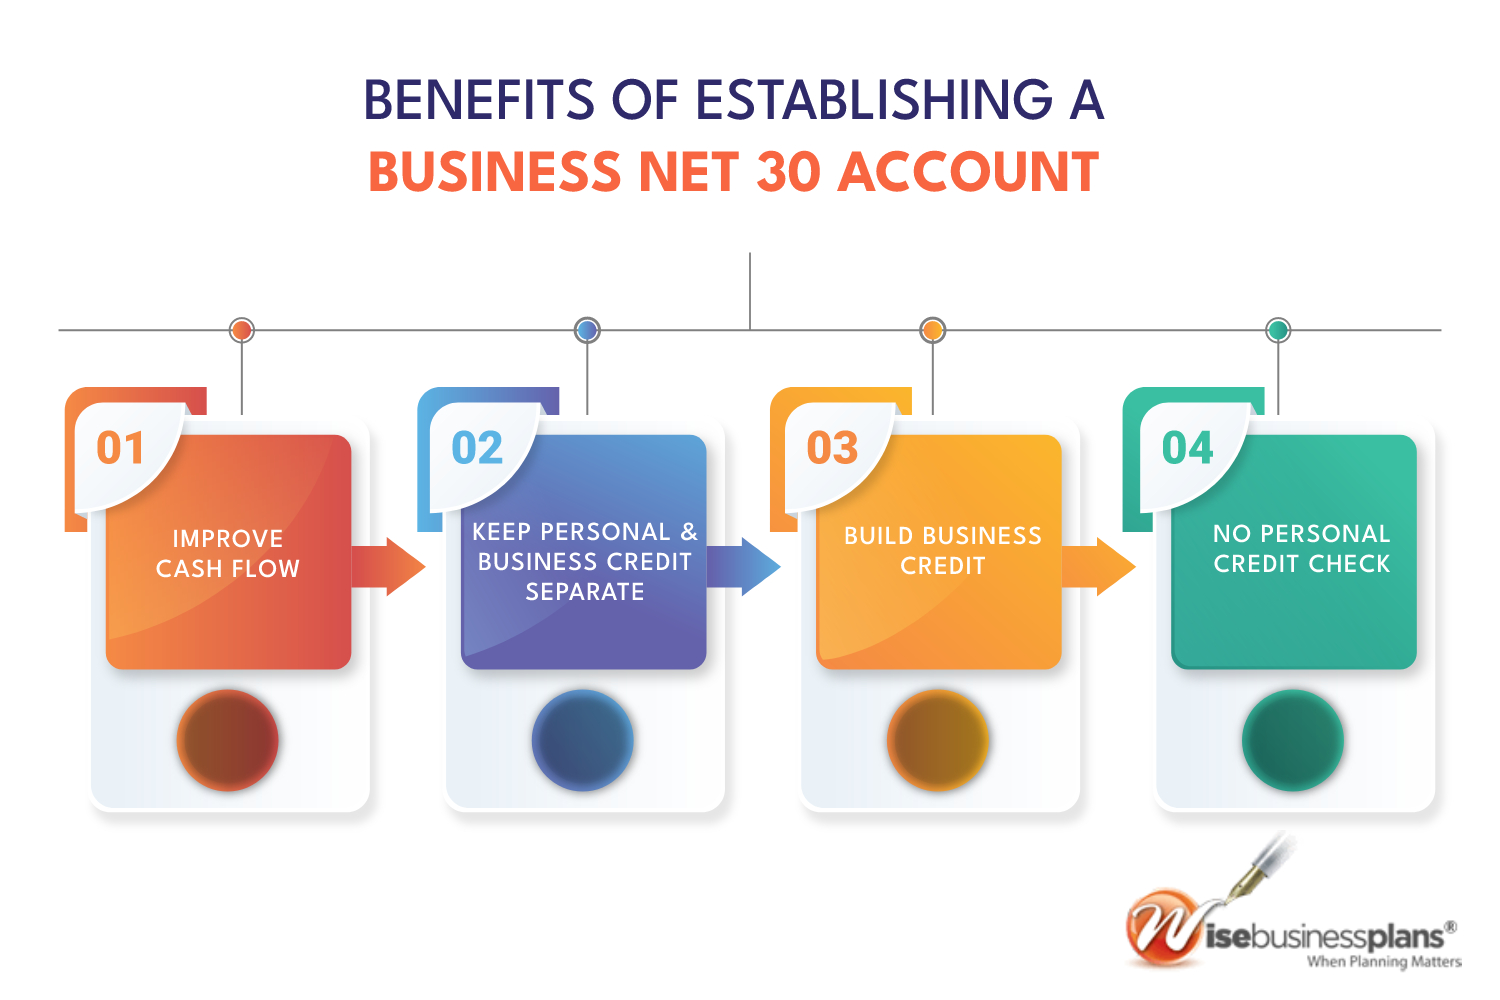 Benefits of establishing a business net 30 vendors account